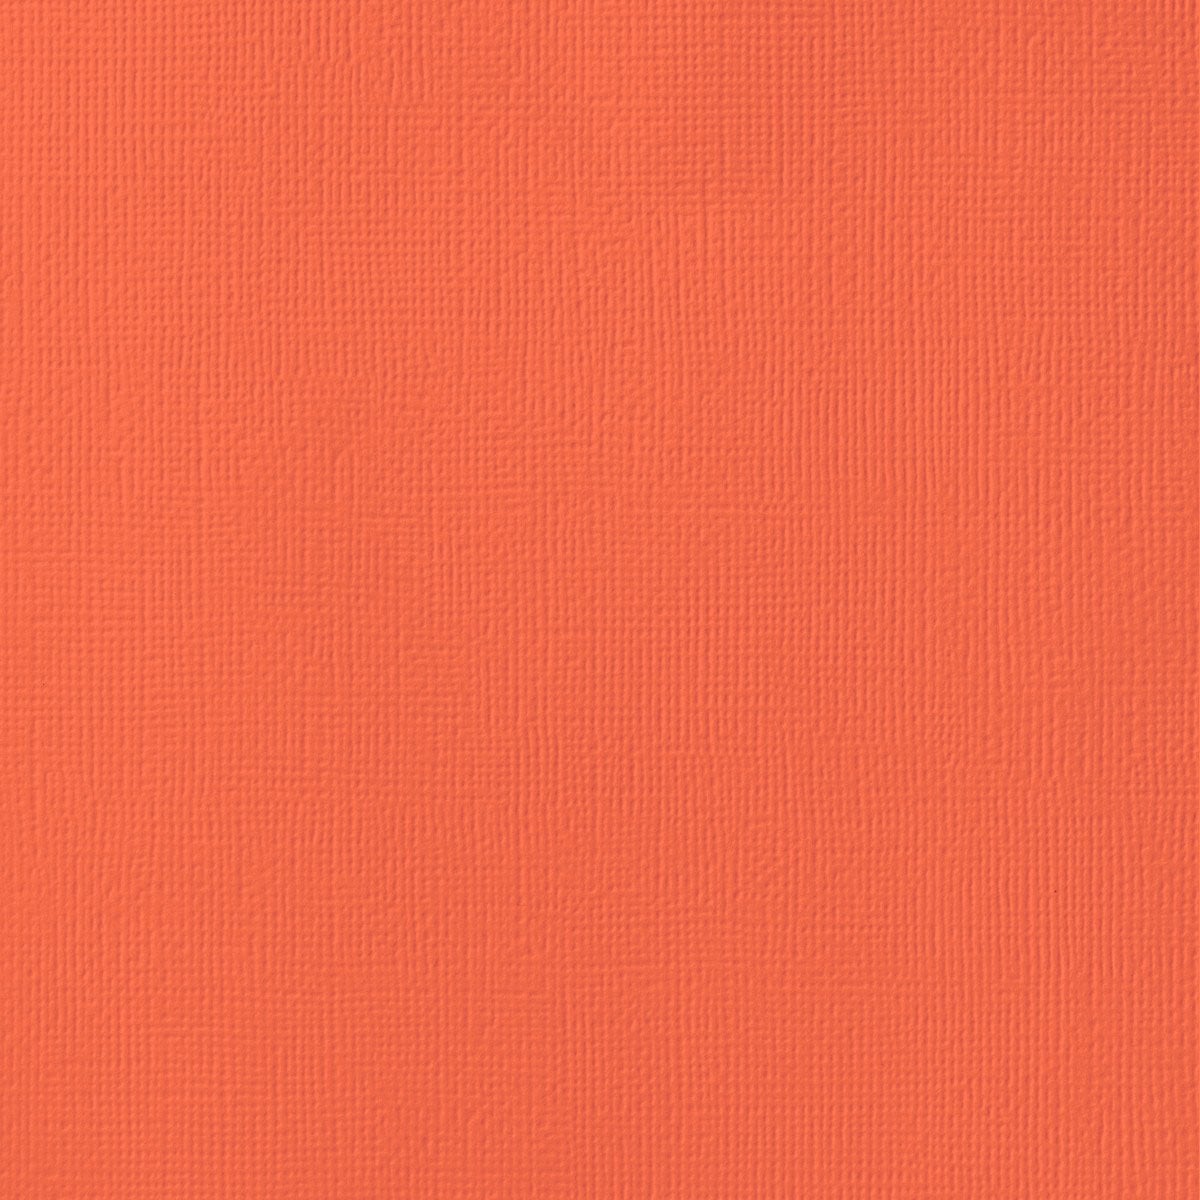 POPPY orange cardstock - 12x12 inch - 80 lb - textured scrapbook paper - American Crafts